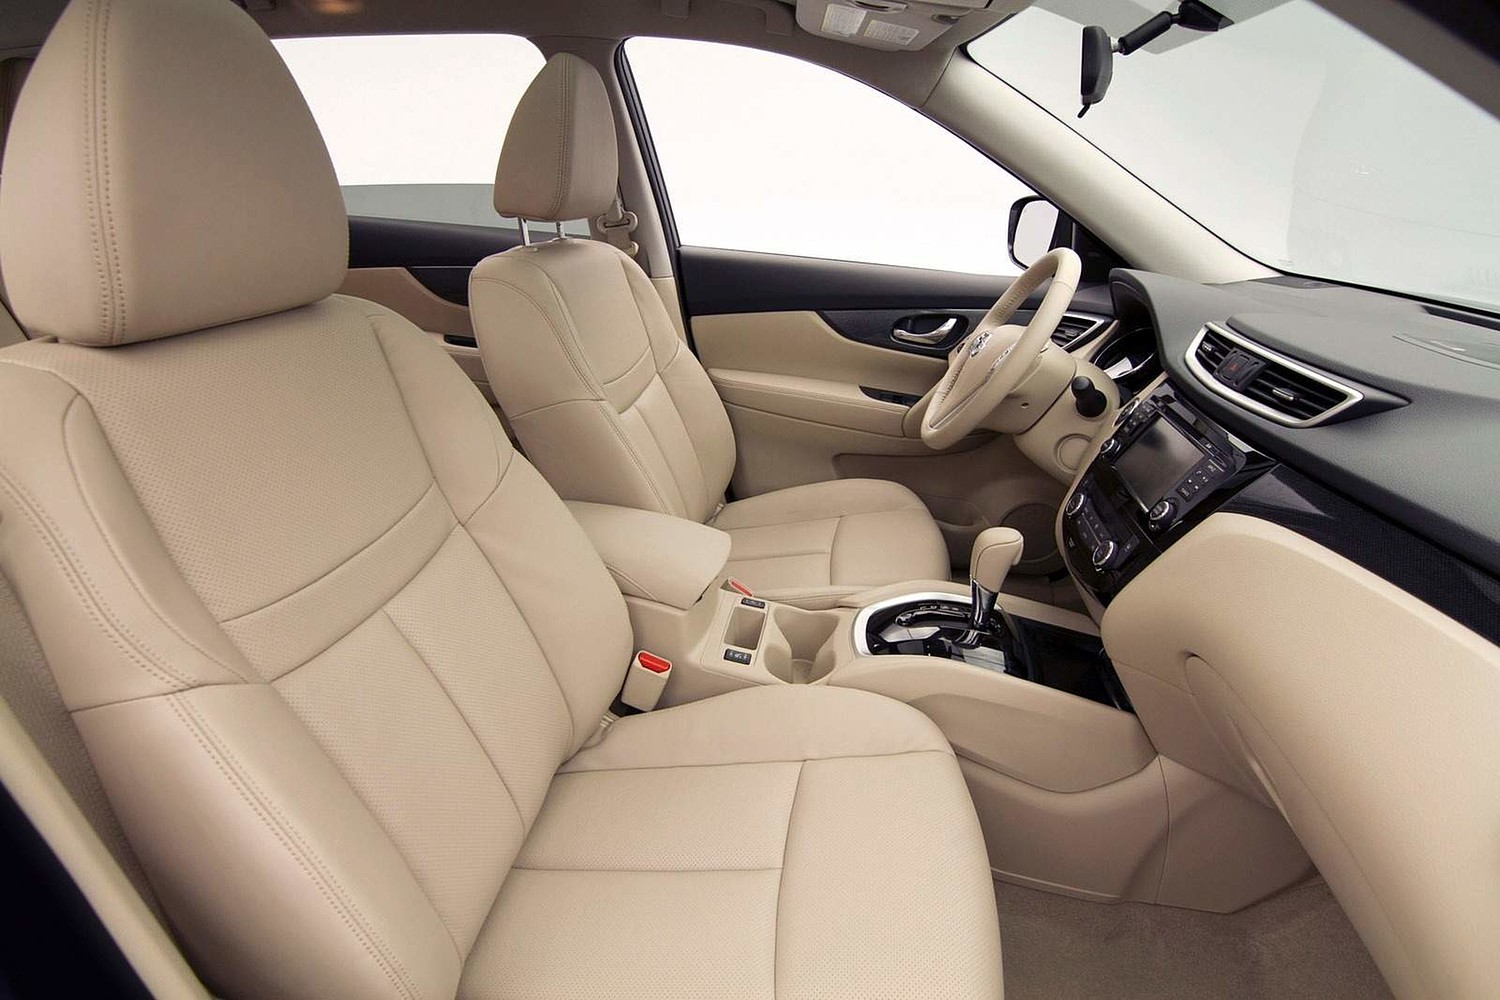 Nissan Rogue SL 4dr SUV Interior (2014 model year shown)